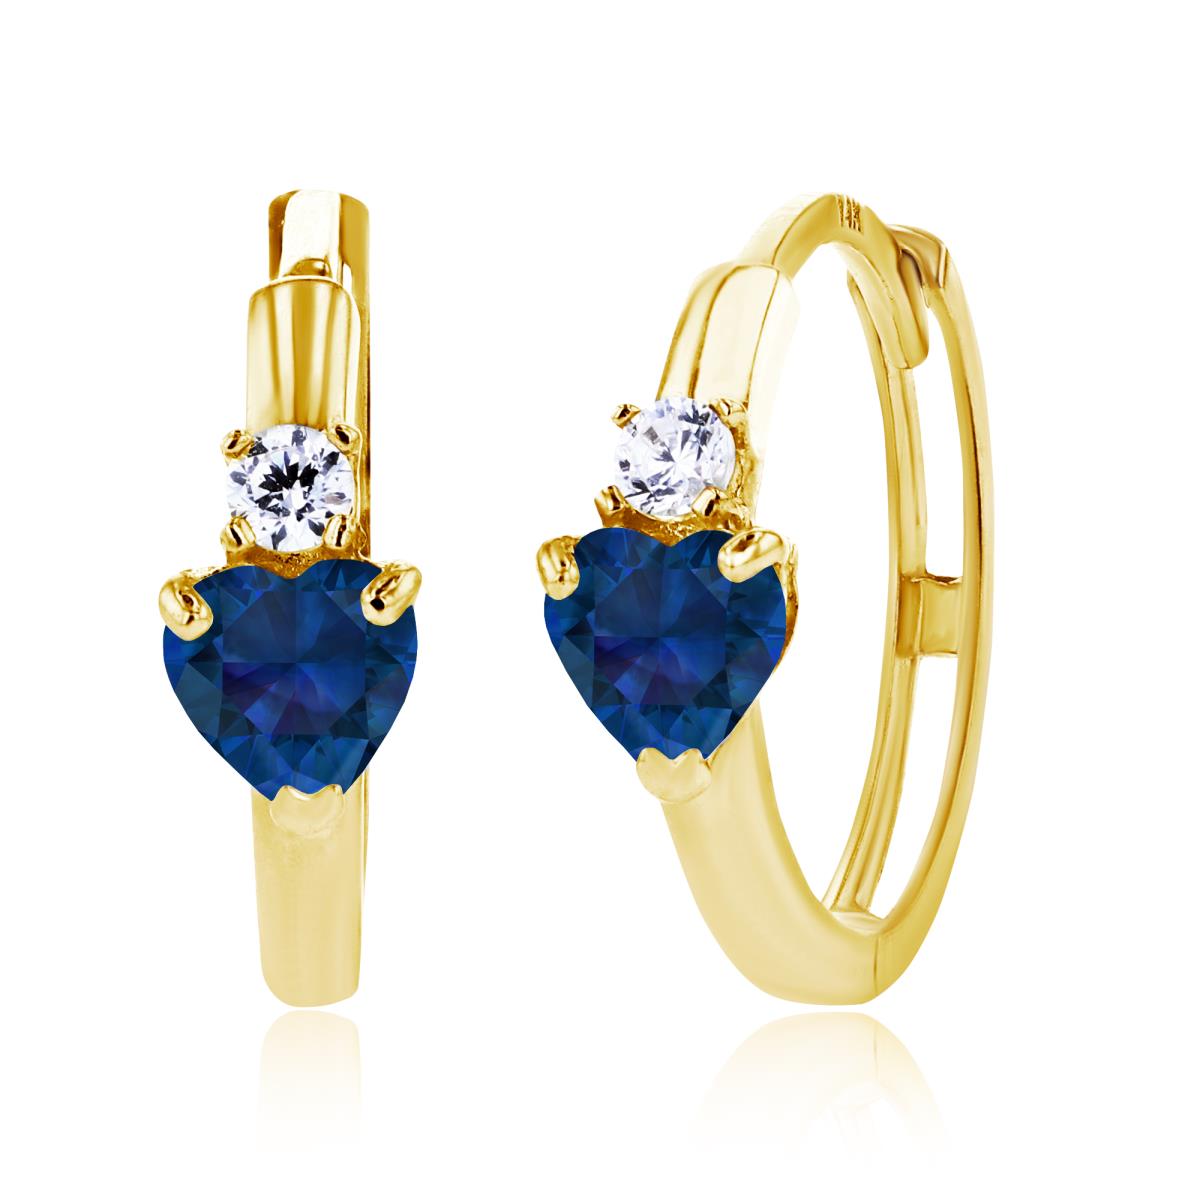 14K Yellow Gold 4mm Heart Created Blue Sapphire & 2mm Created White Sapphire Huggie Earrings